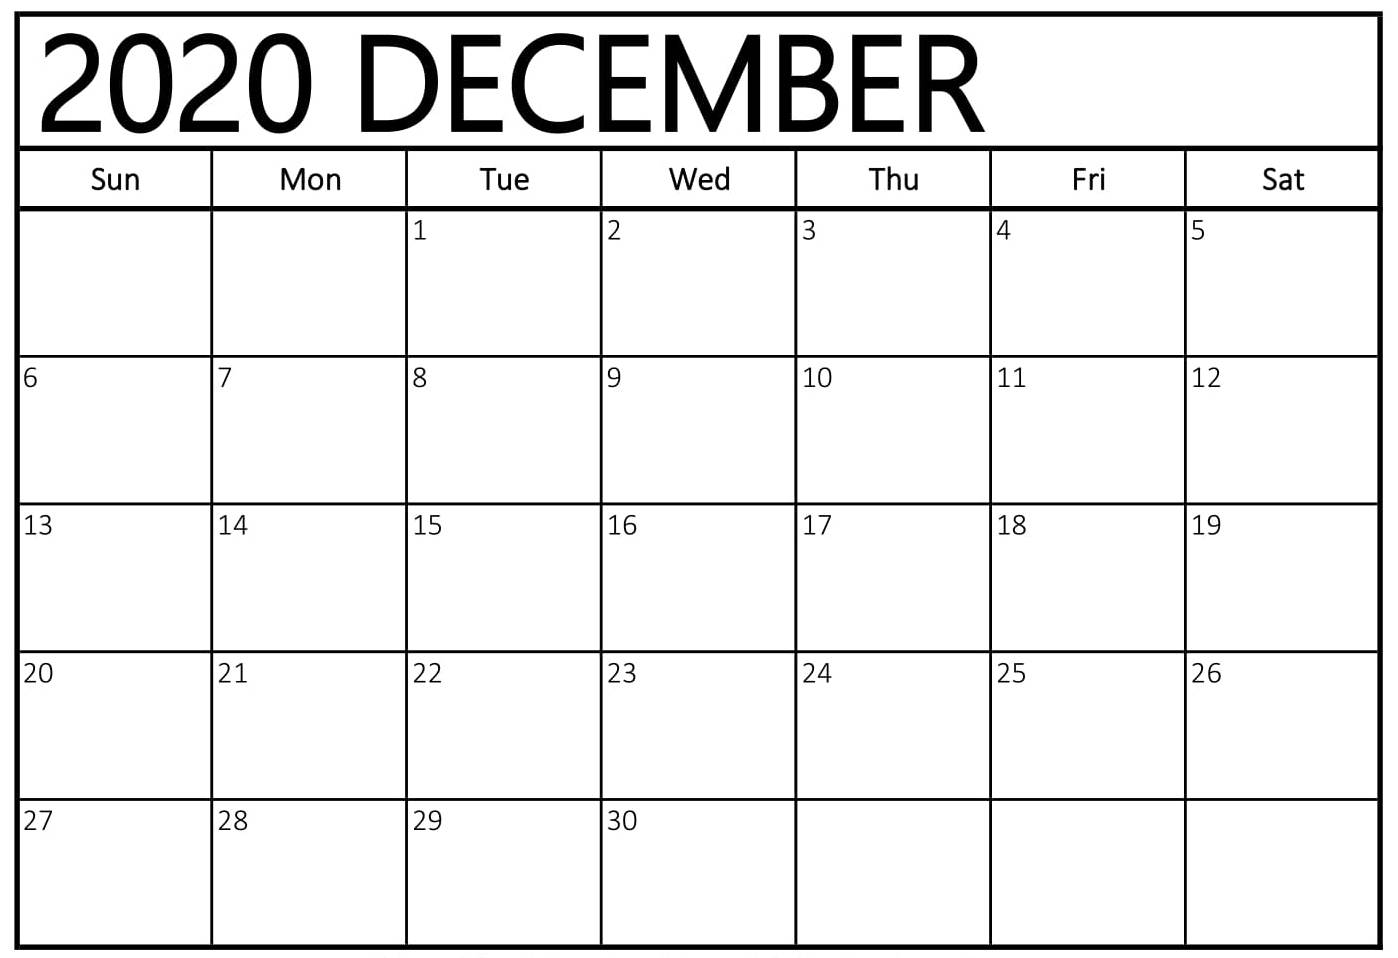 December 2020 Calendar Word